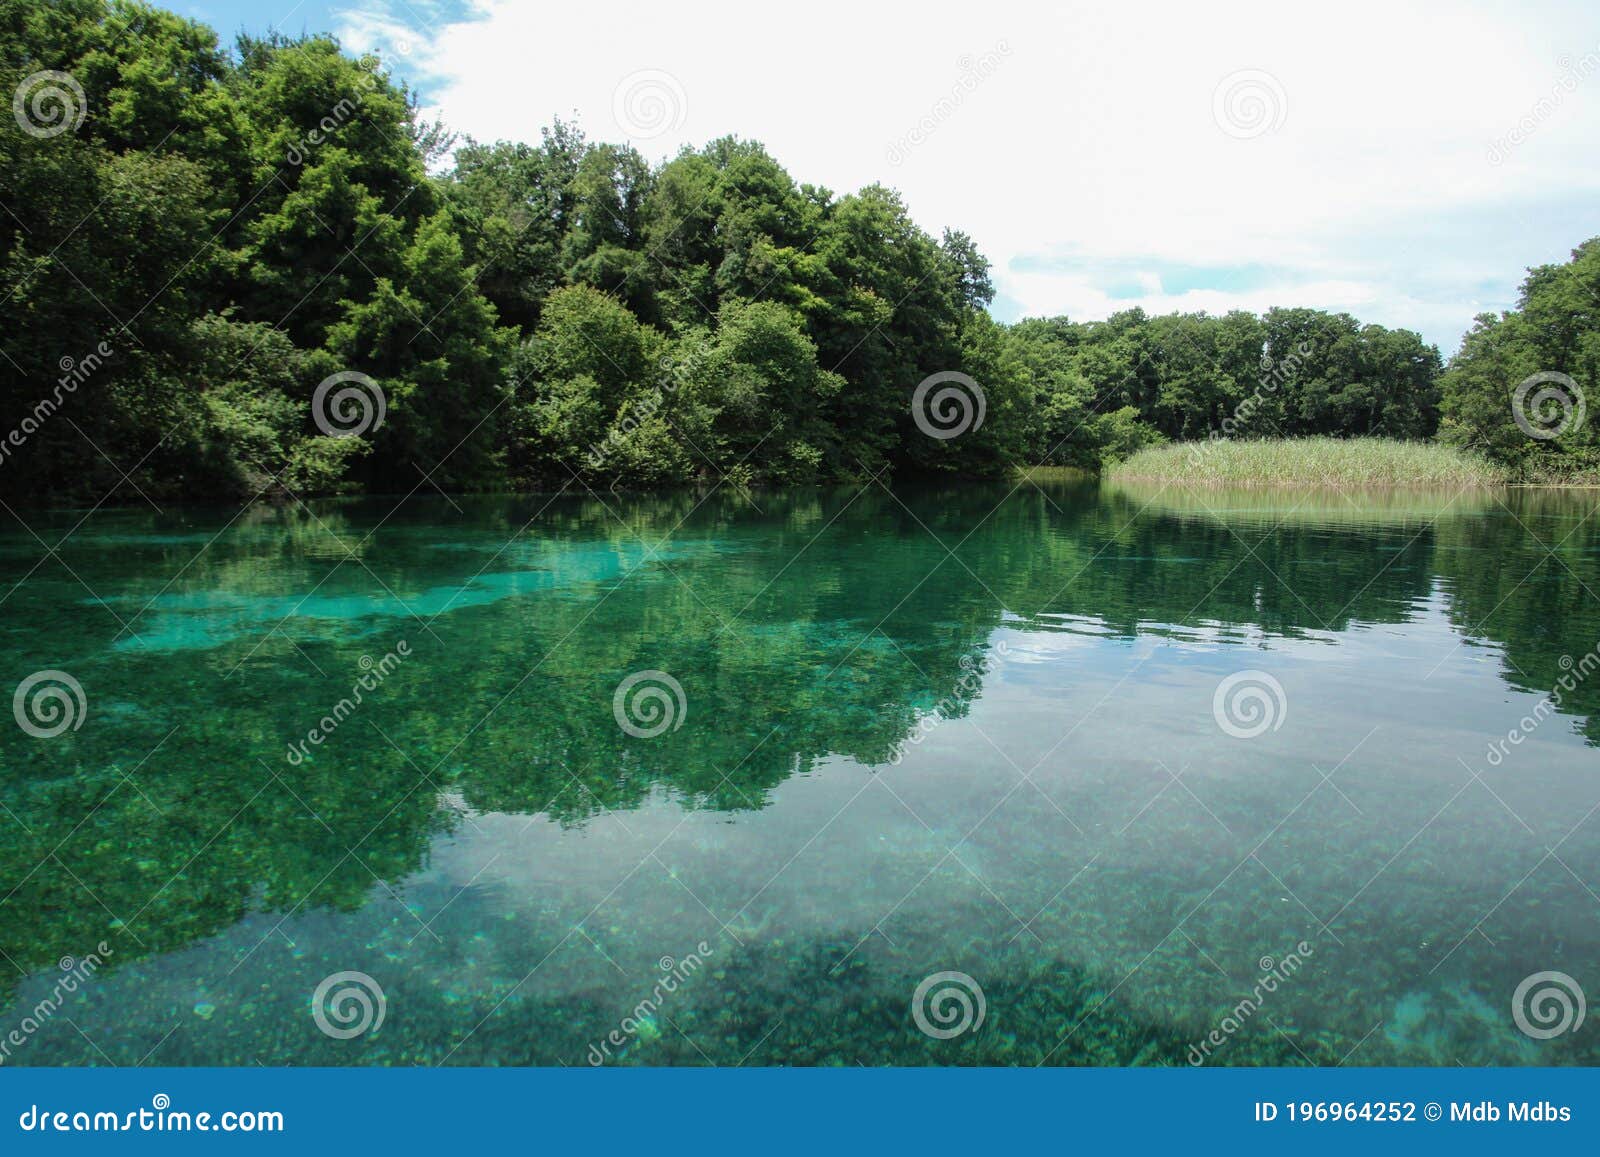 ohrid - macedonia. saint naum springs black drin river near ohrid lake. ohrid, macedonia